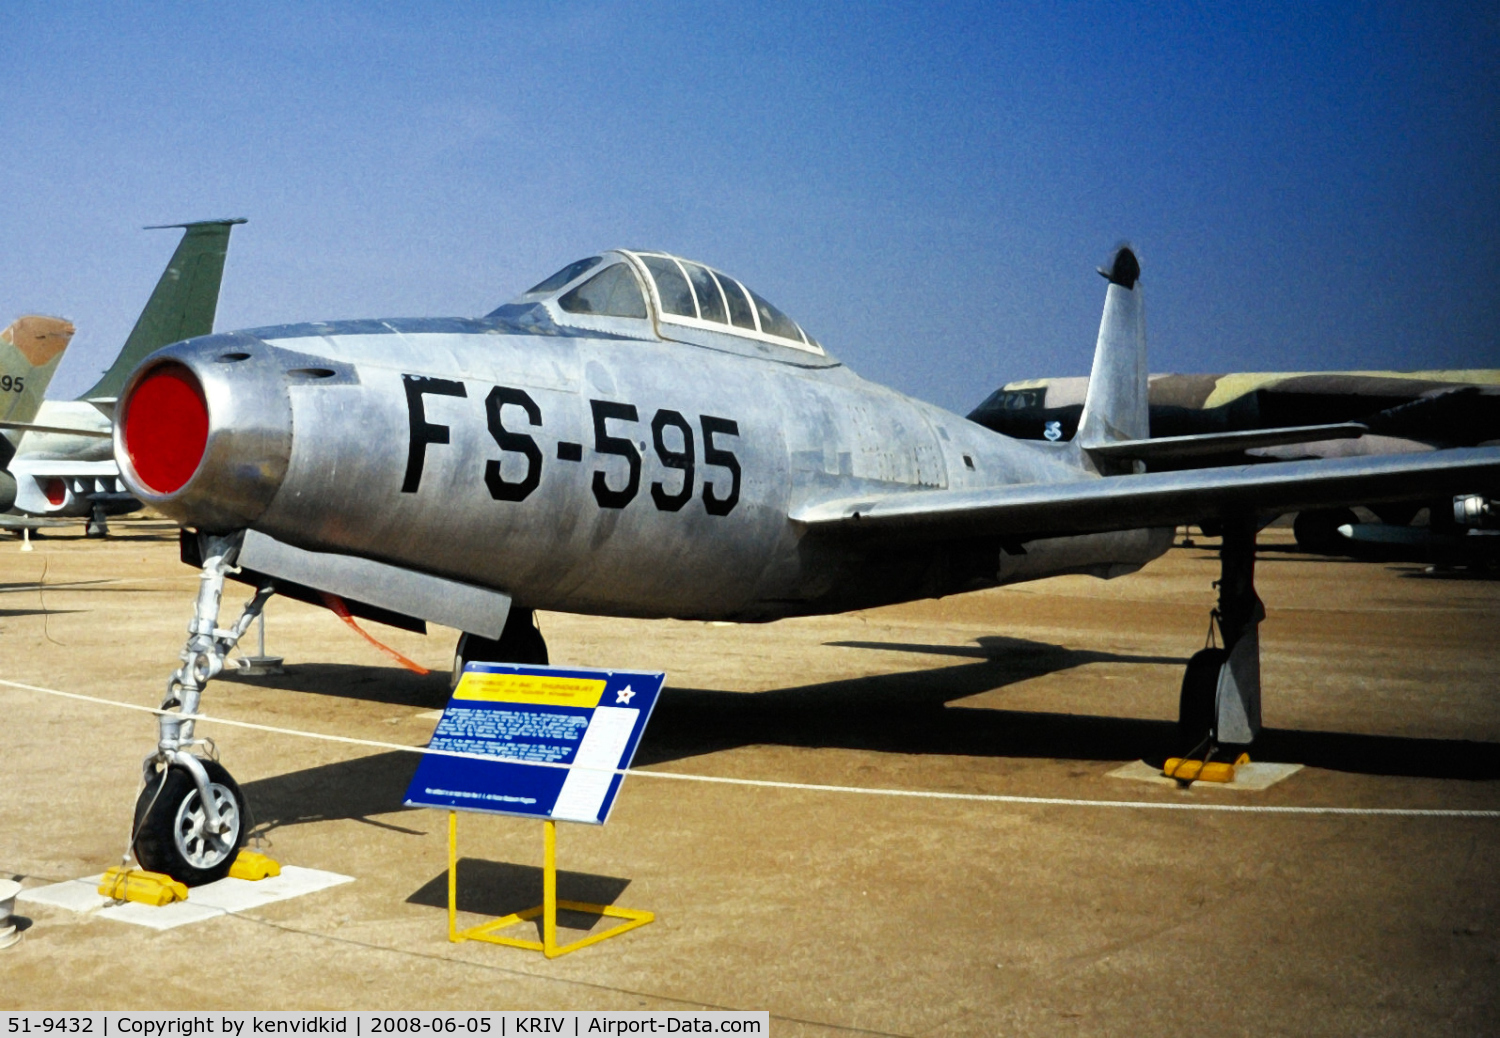 51-9432, 1951 General Motors F-84F Thunderstreak C/N Not found 51-9432, At March AFB Museum, circa 1993.